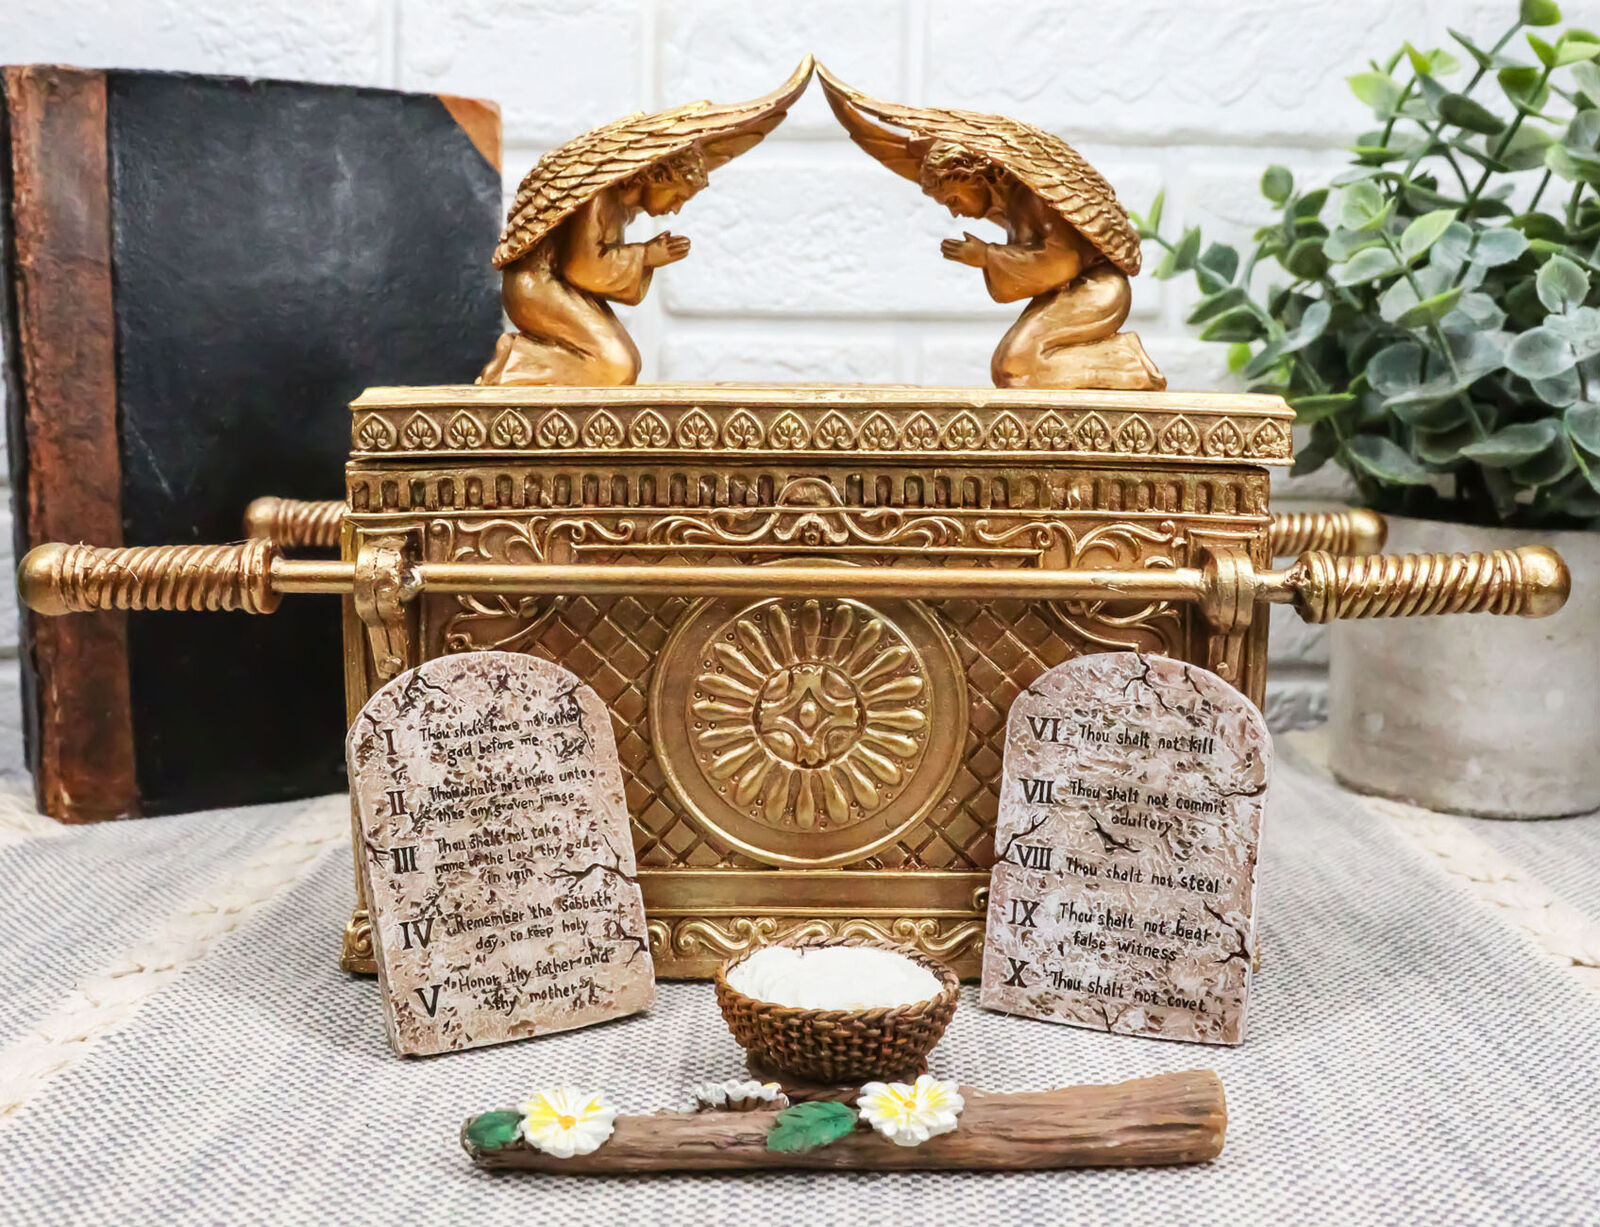 Golden Judaic Ark Of Covenant Model With Contents Decorative Box Sculpture